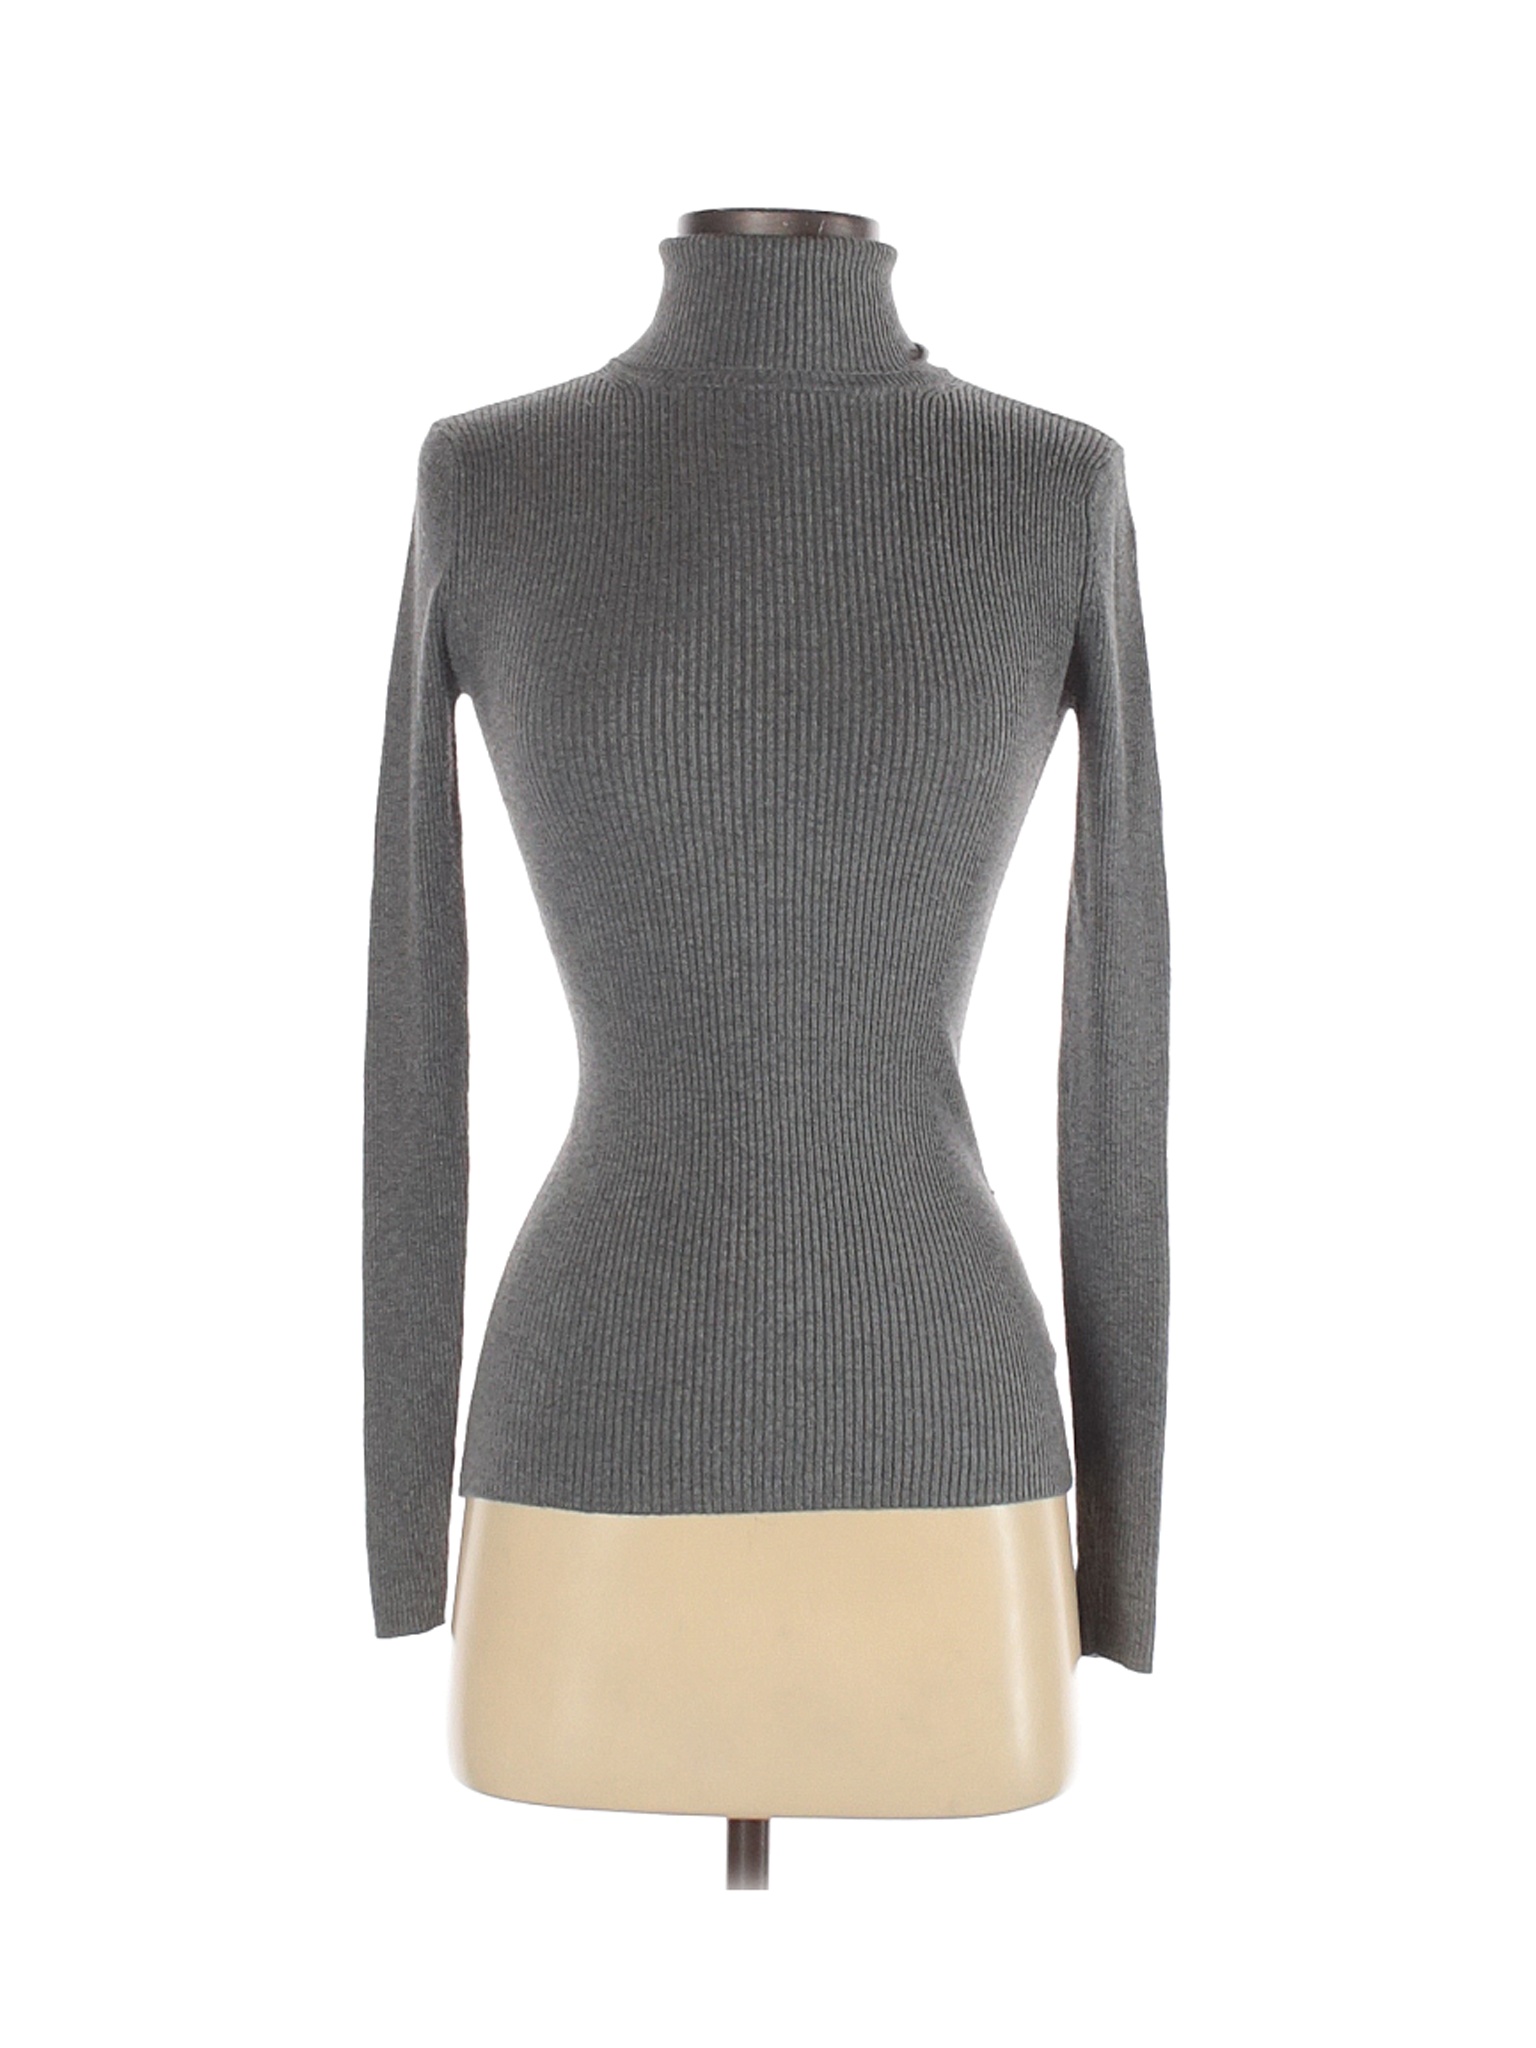 Express Women Gray Turtleneck Sweater XS | eBay